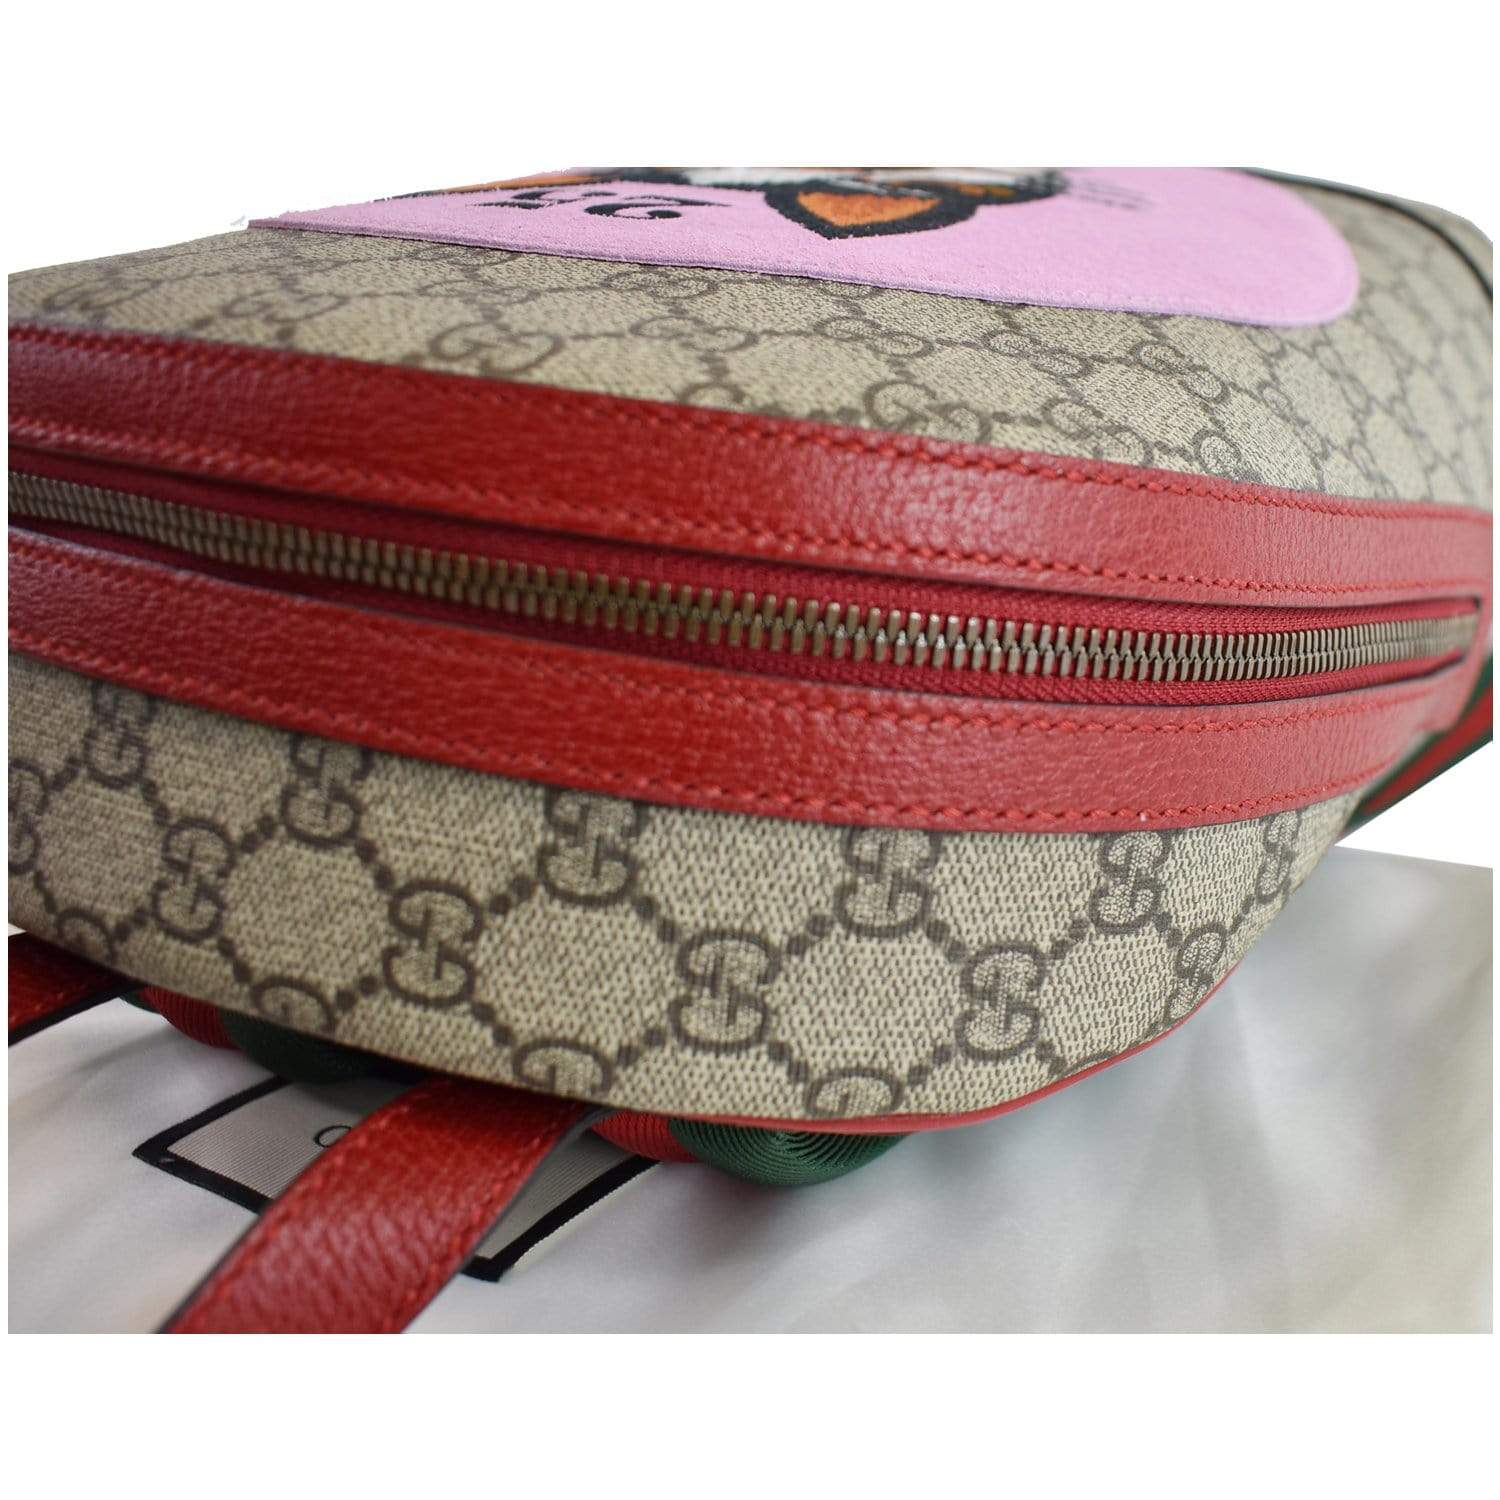 Gucci Bosco GG Supreme Canvas Backpack Bag Beige - for Women